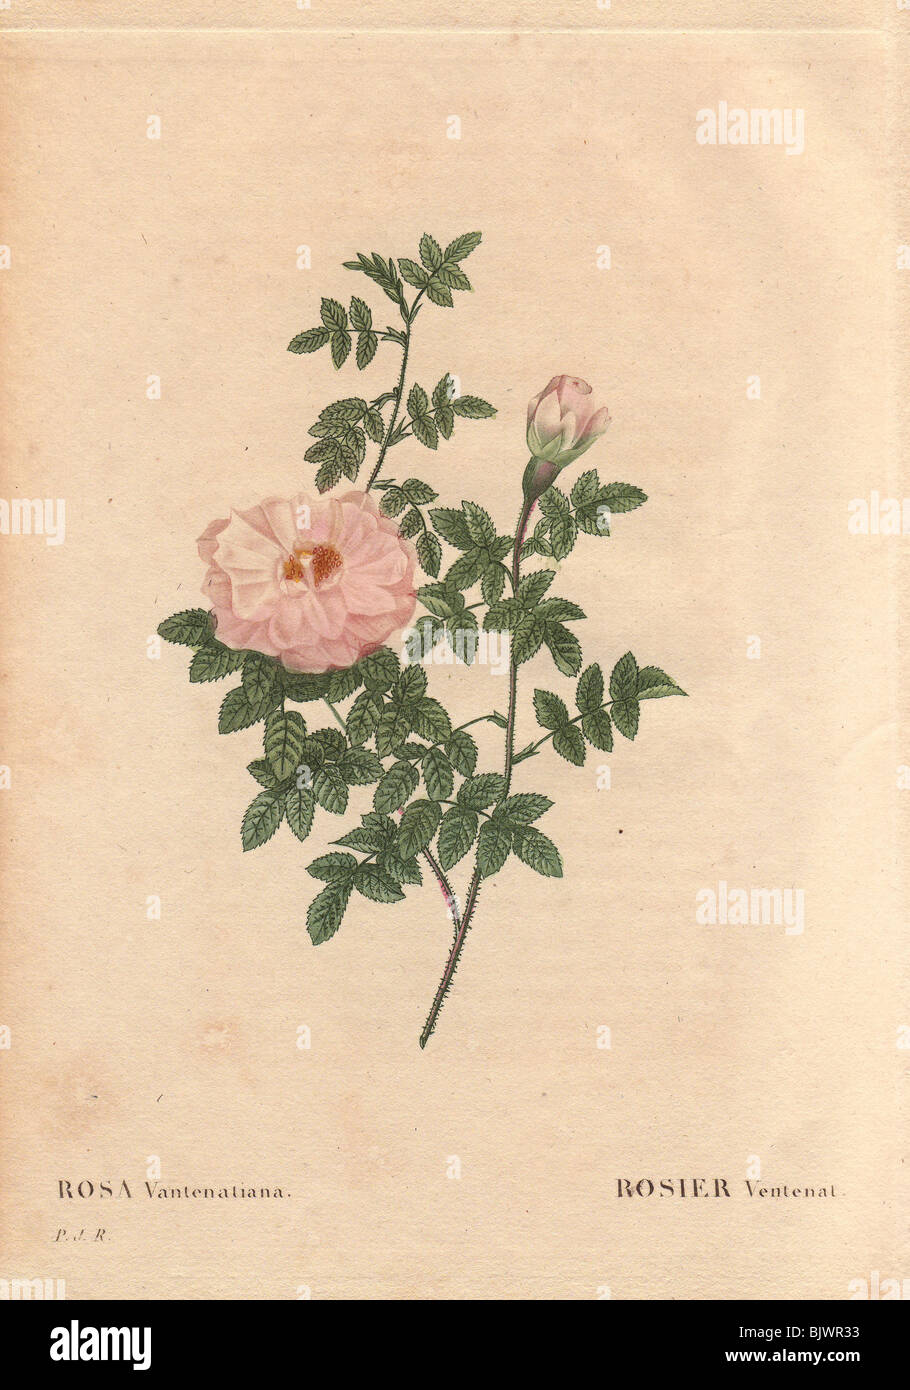 Ventenat's Rose with pale pink flowers (Rosa ventenatiana). Rosier Ventenat. Stock Photo